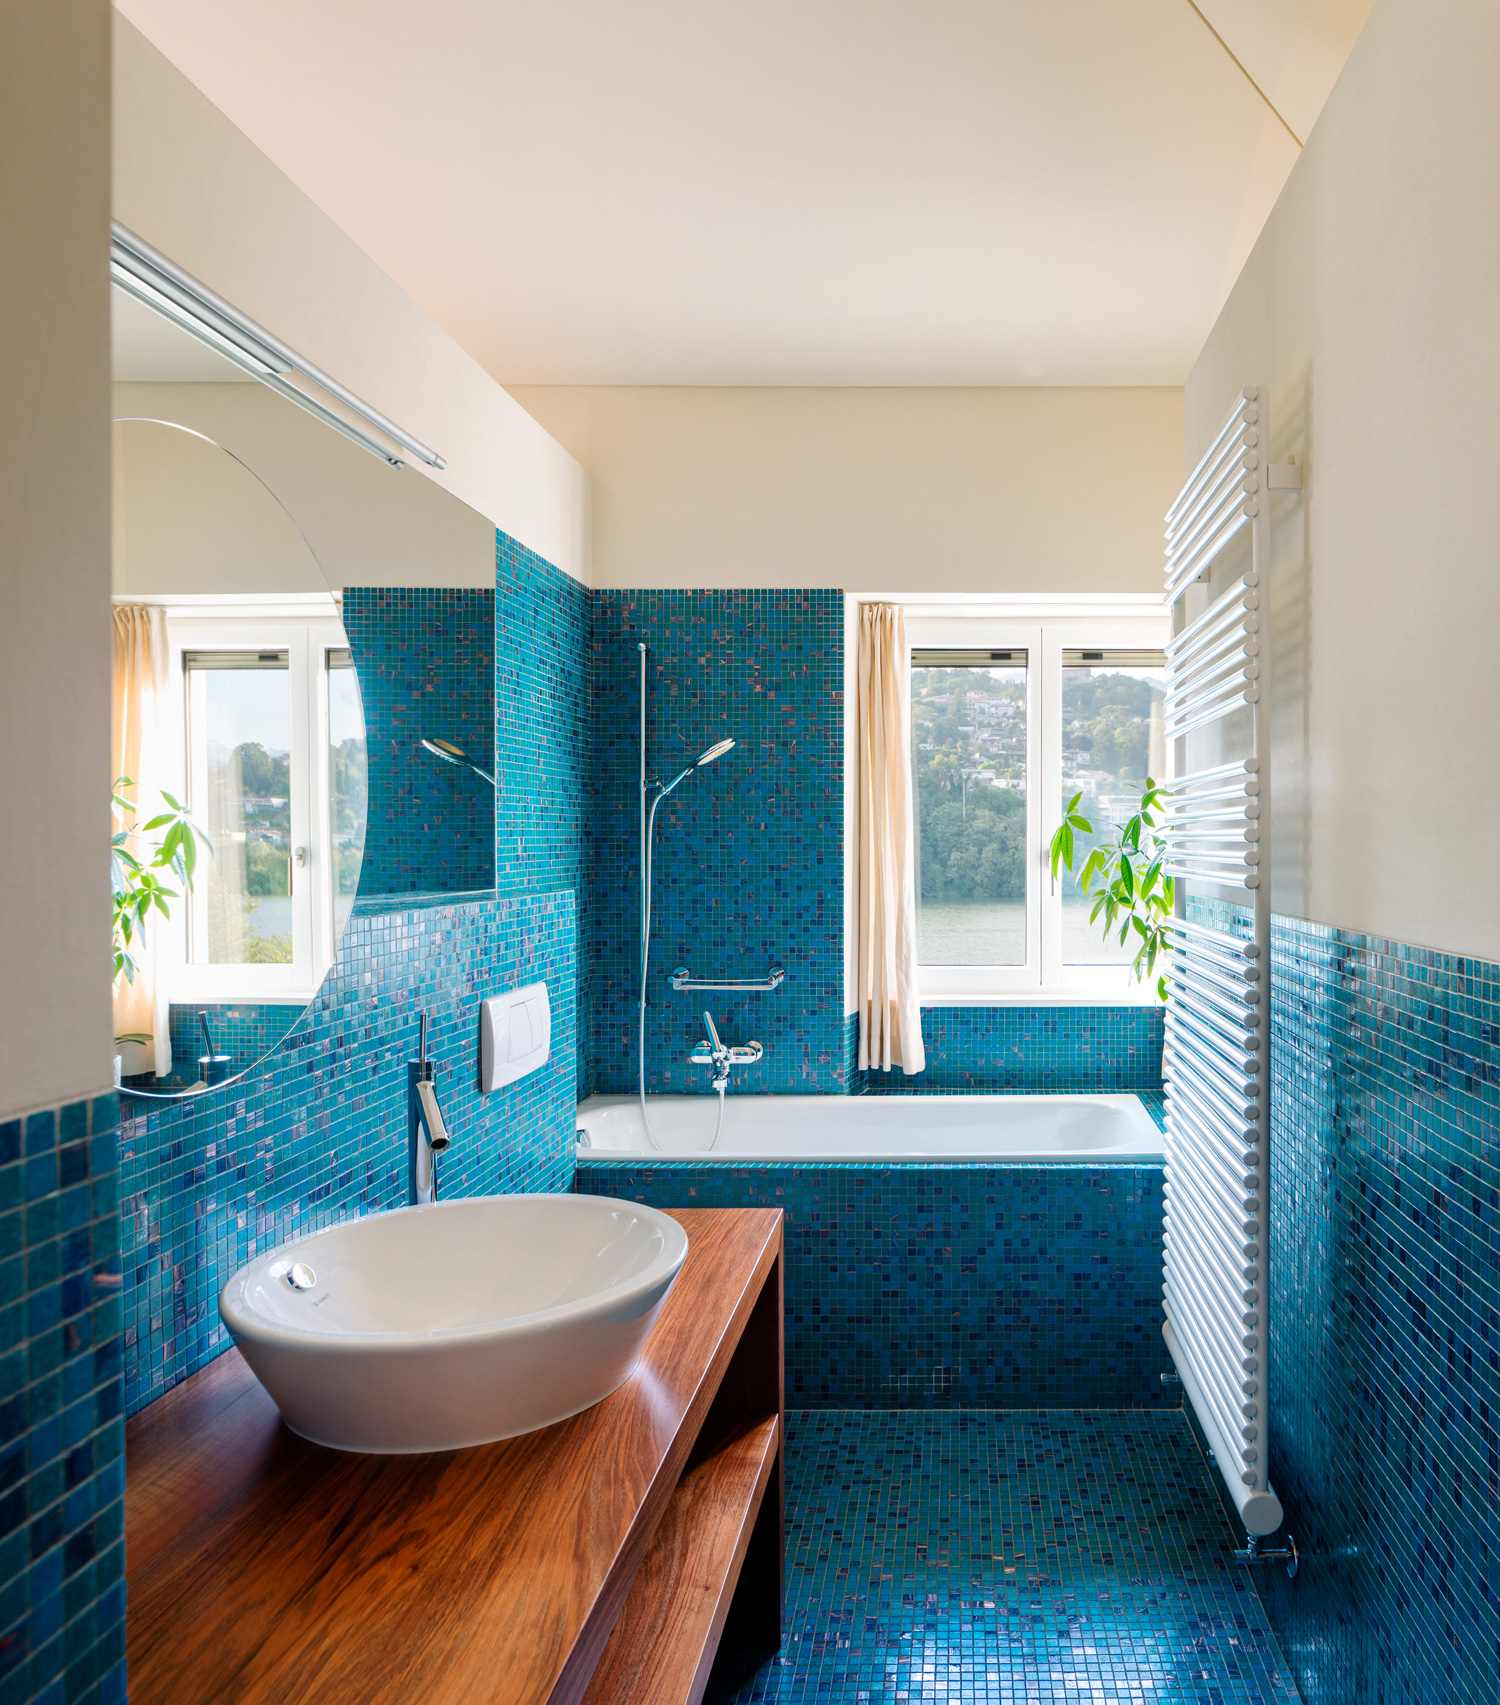 Modern blue bathroom interior, overlooking nature. No one inside is very empty. Warm light